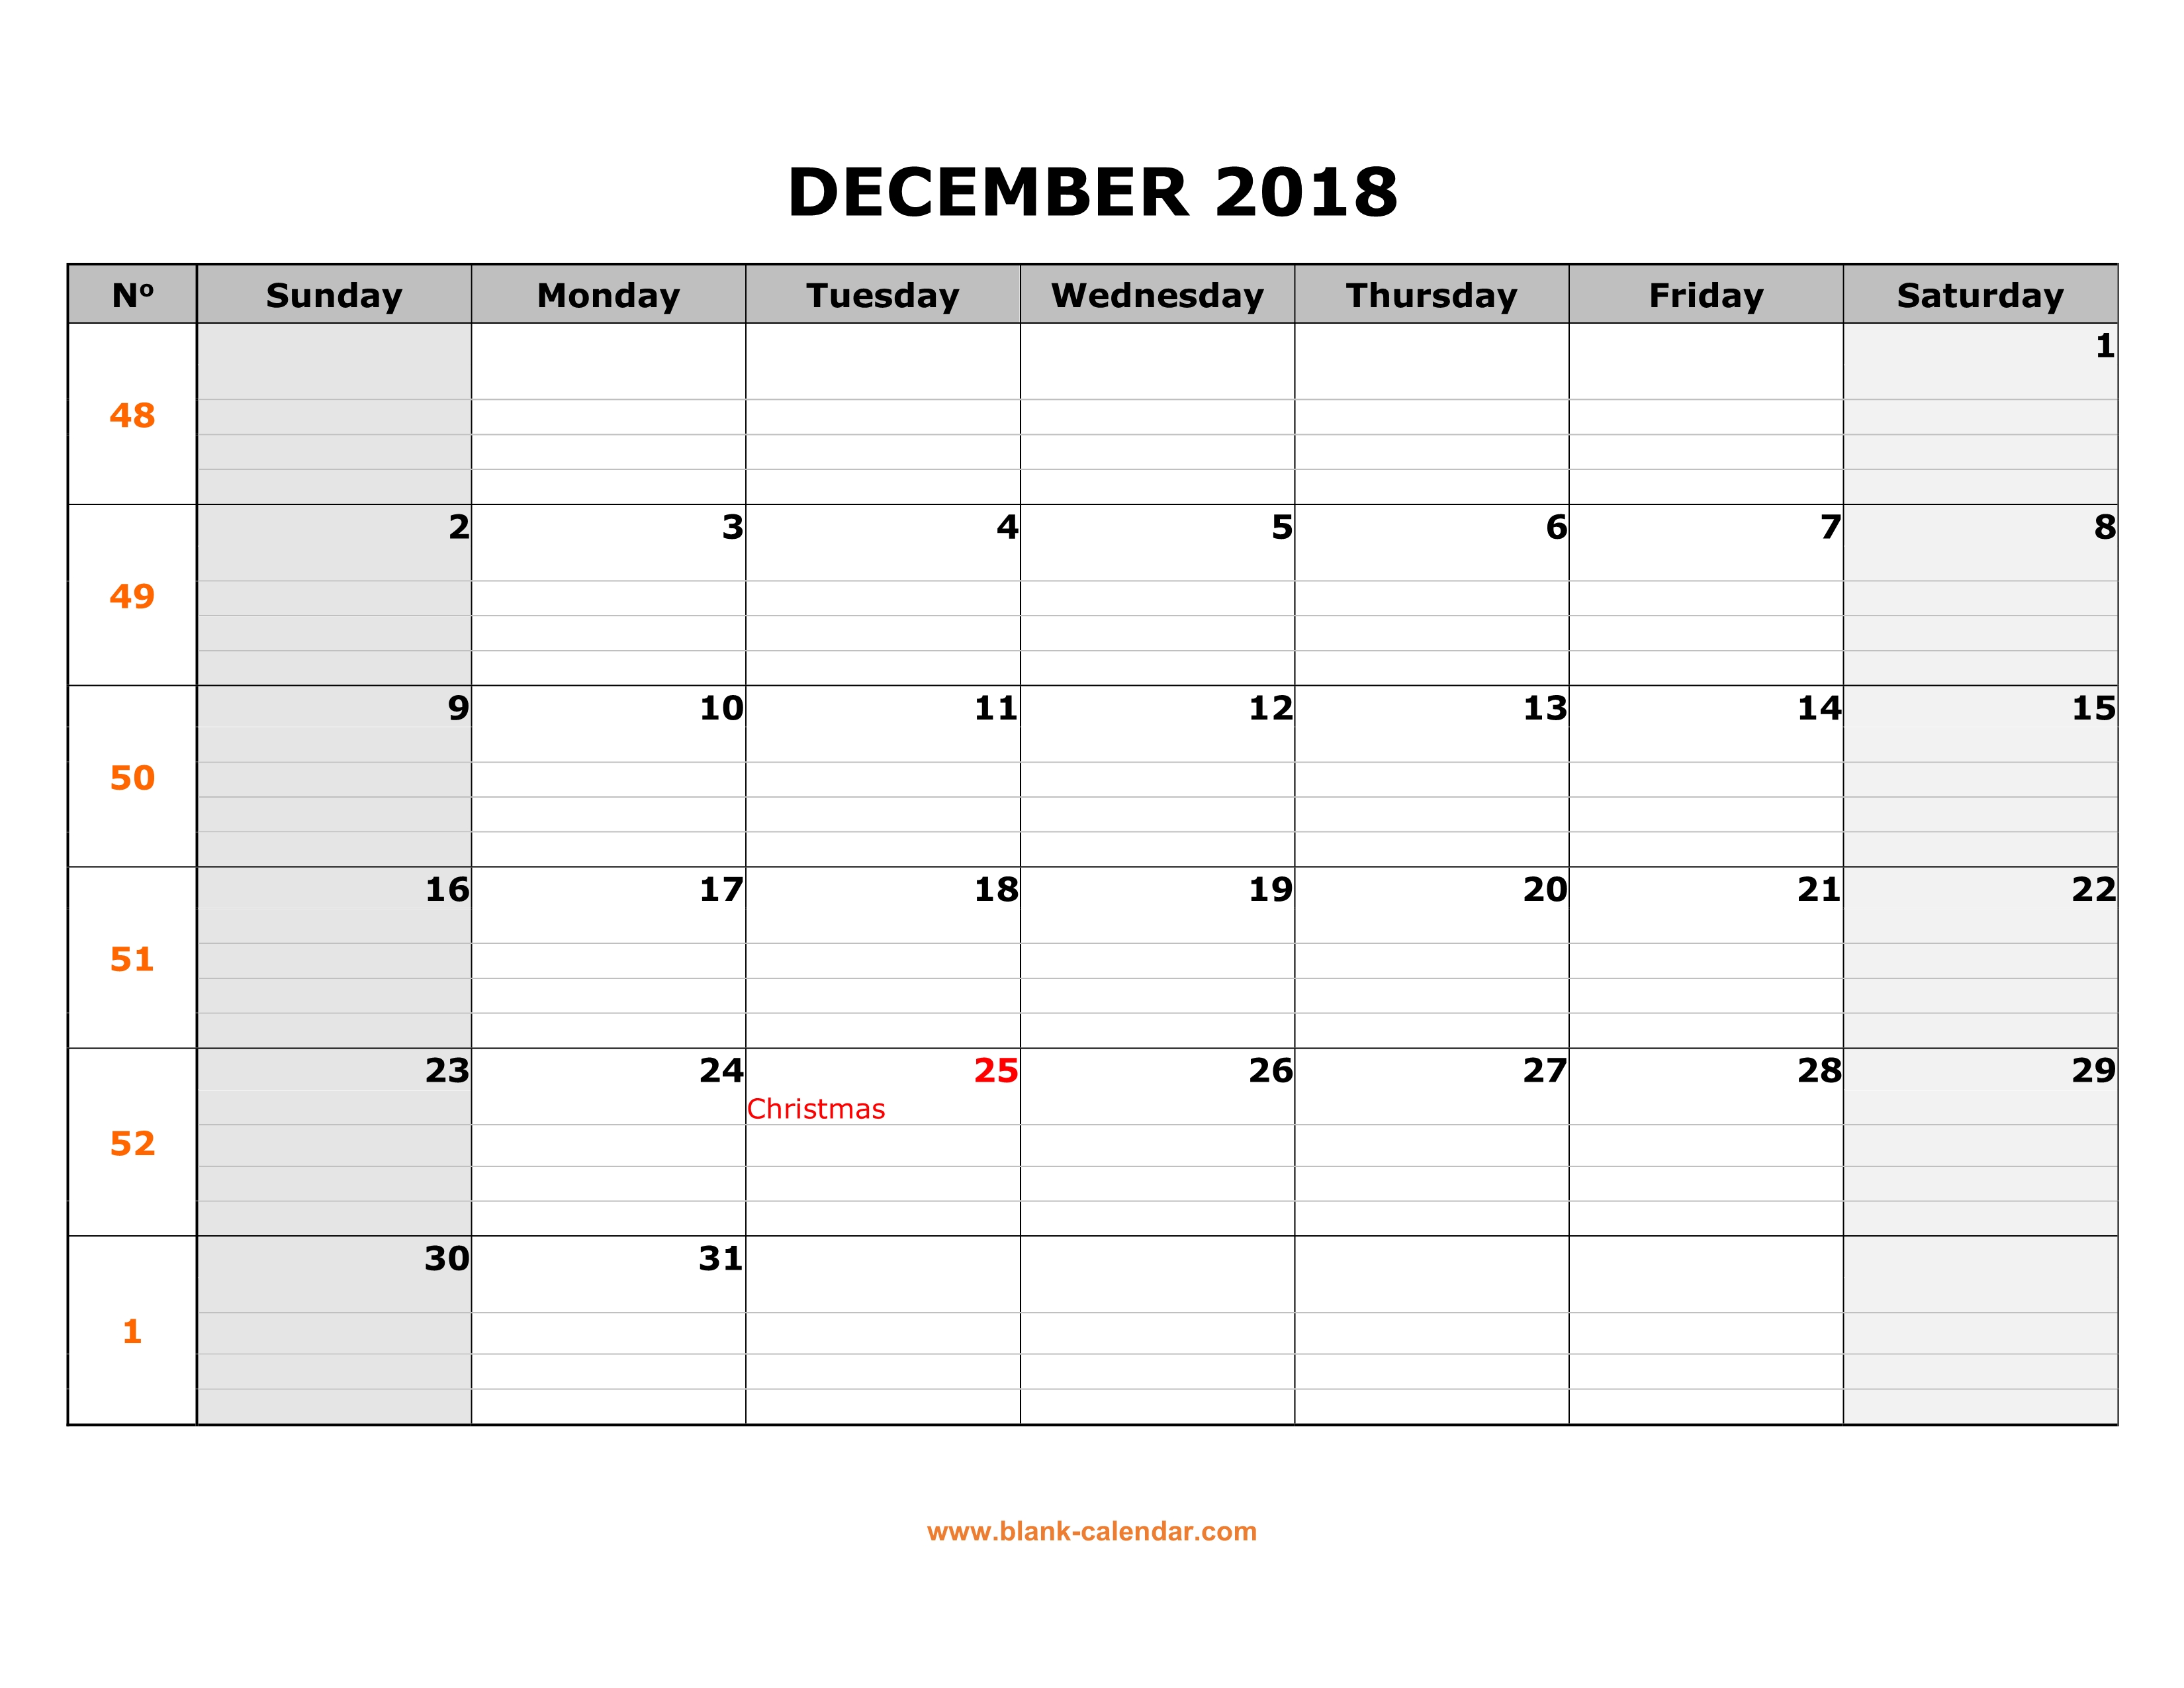 free-download-printable-december-2018-calendar-large-box-grid-space